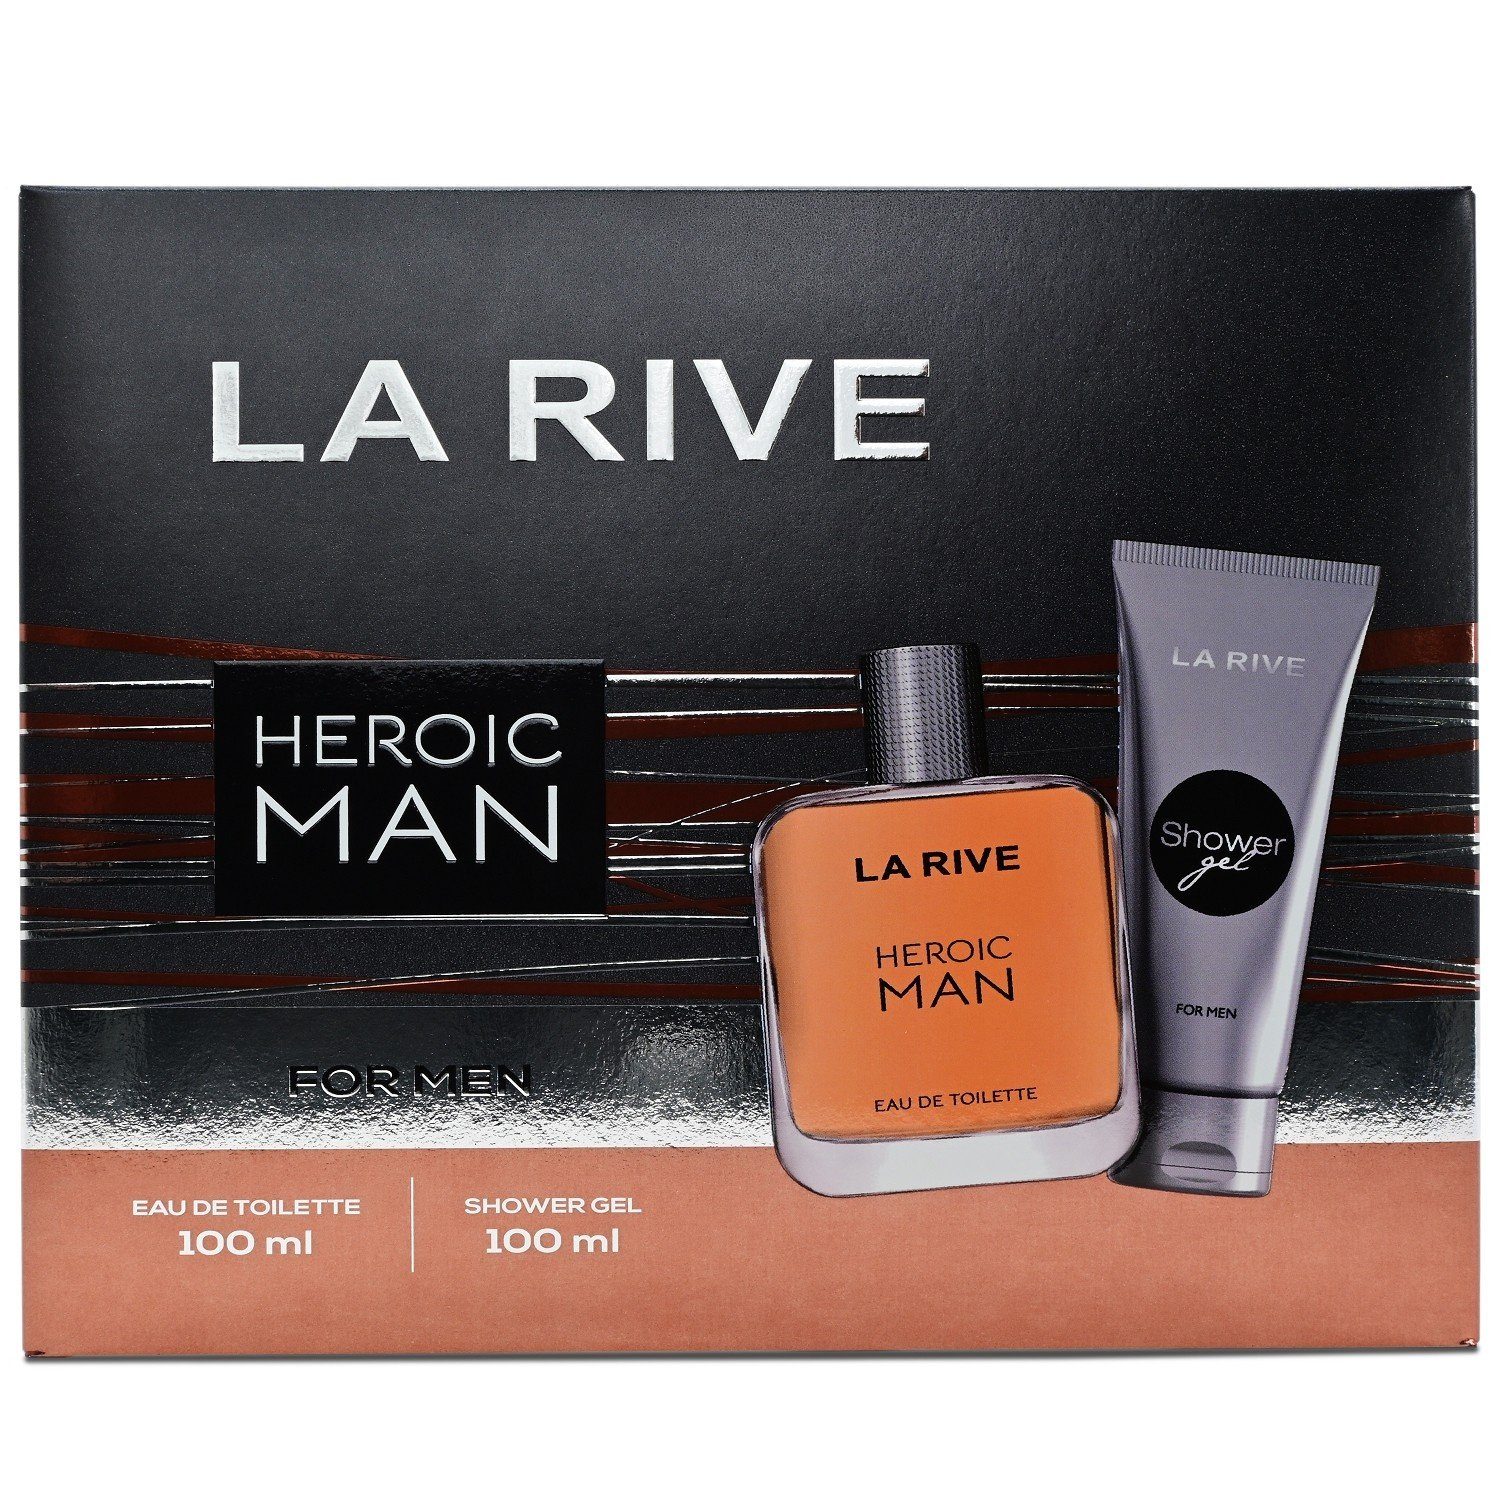 La Rive Duft-Set LA RIVE Man Toilette - Heroic Eau de - Duschbad Geschenkset &